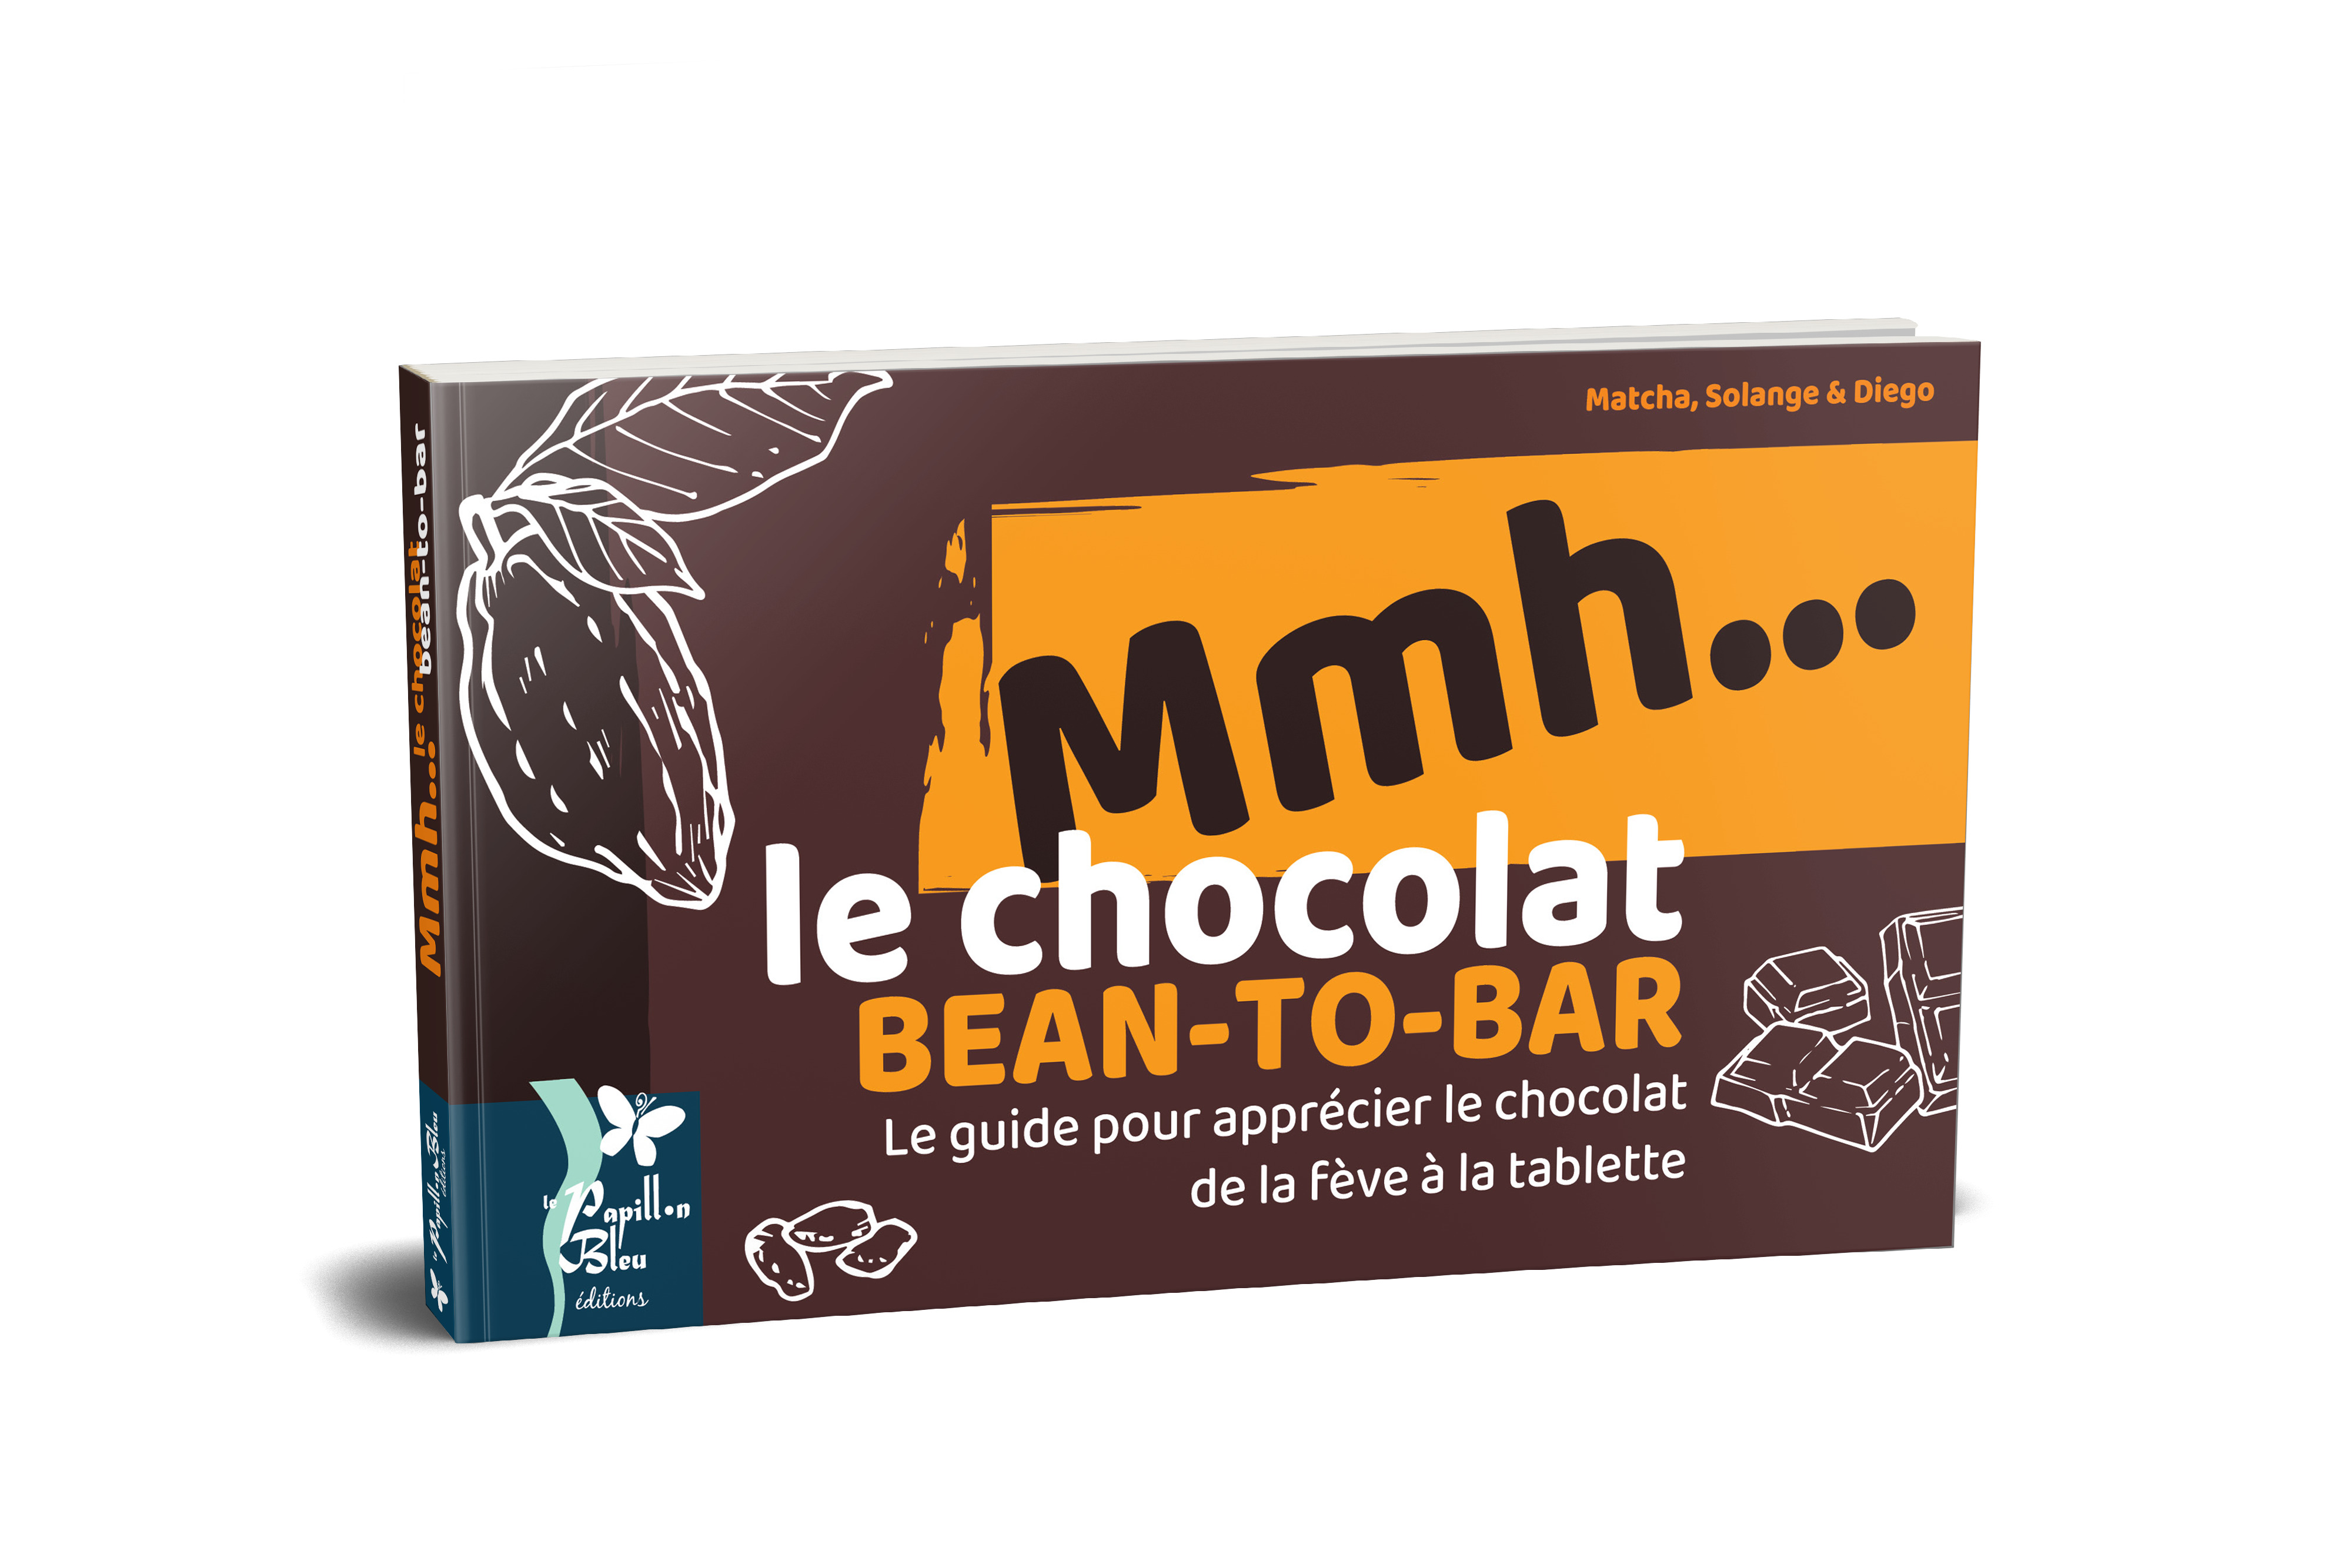 Mmh... le chocolat bean-to-bar - le guide